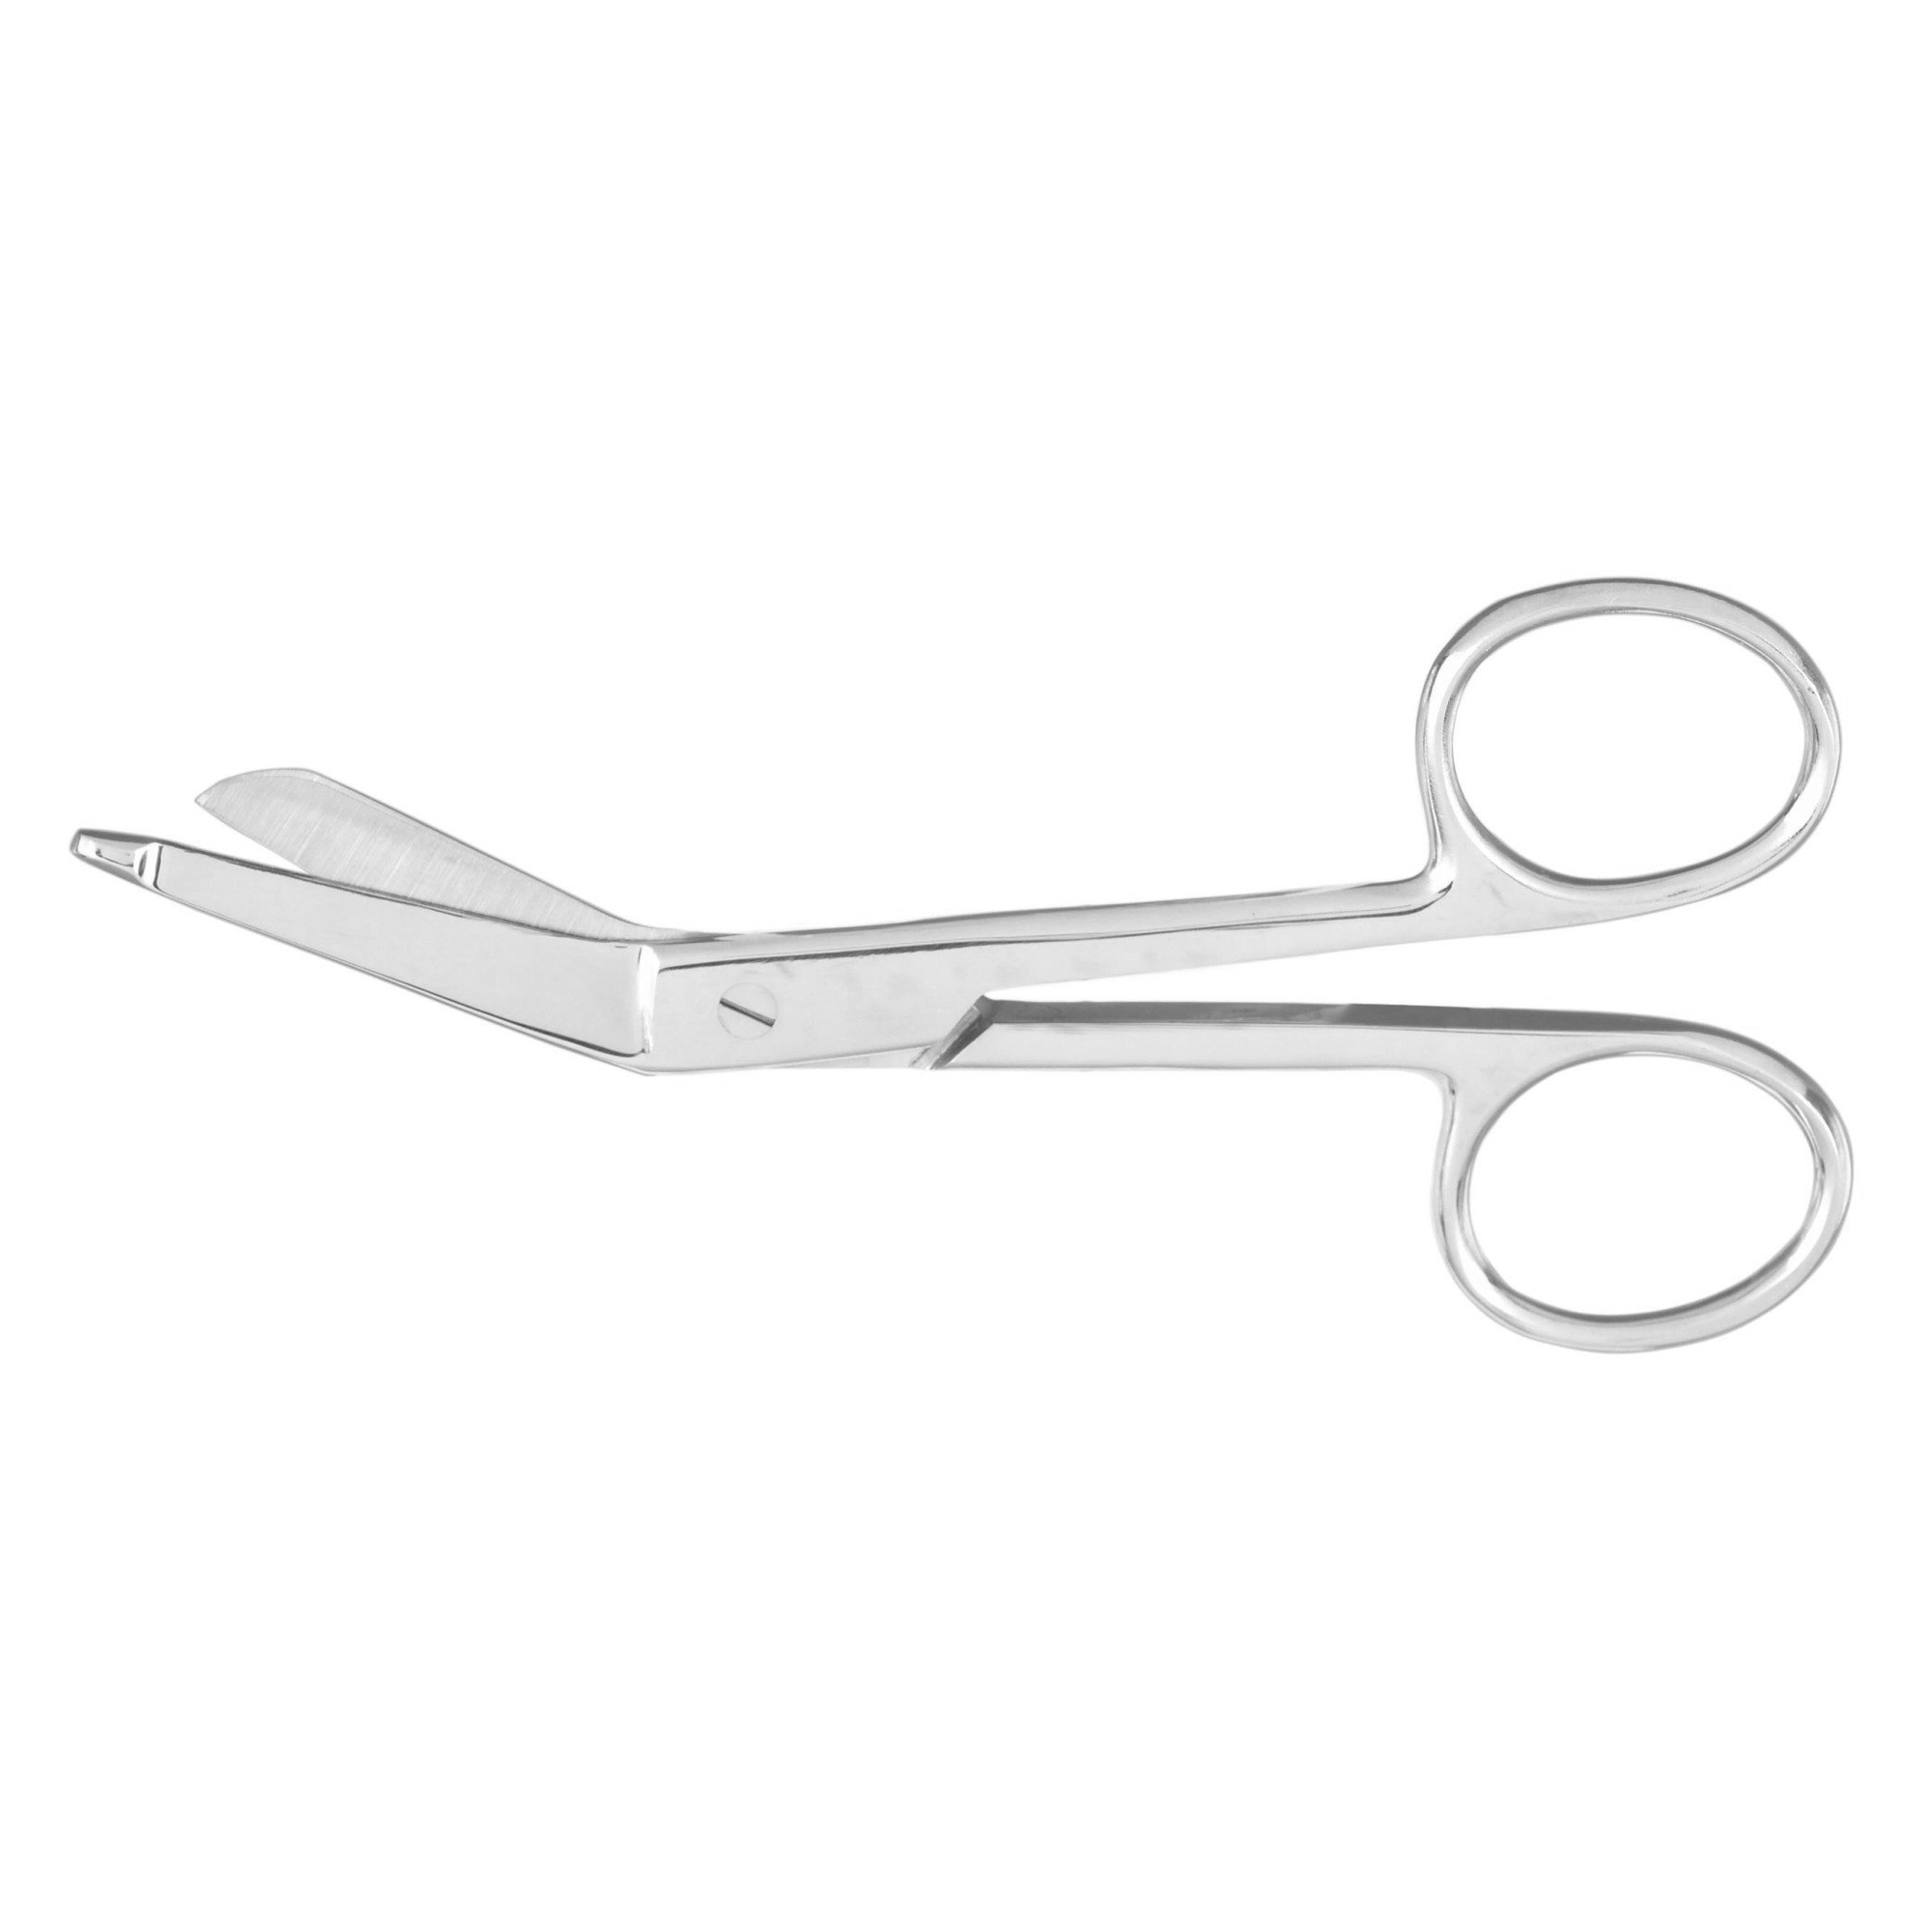 BSN Medical Clean Cut Casting Scissors